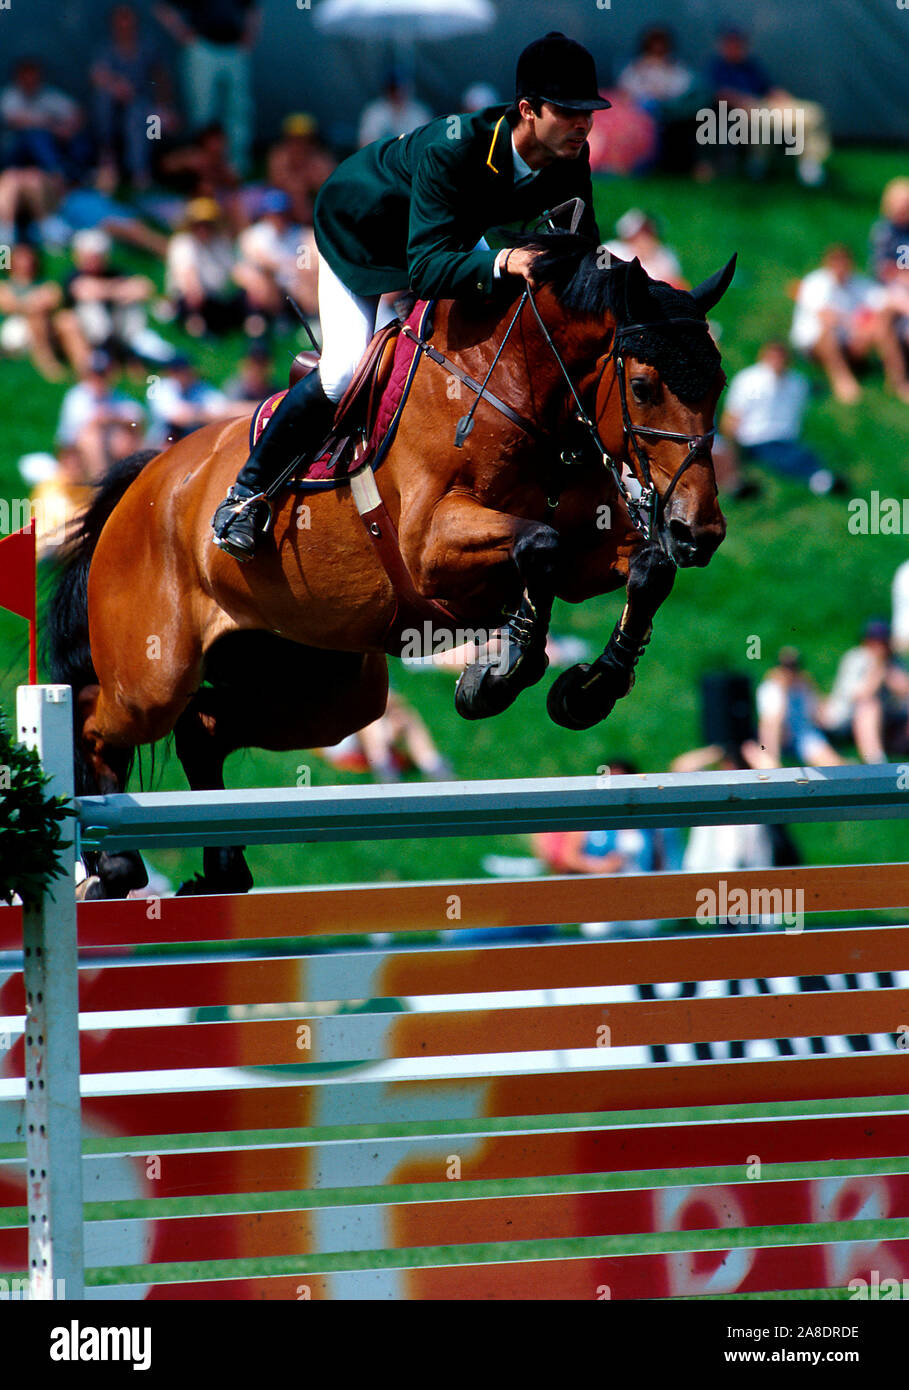 CSIO St. Gallen, May 1999 Rodrigo Pessoa (BRA) riding Gandini